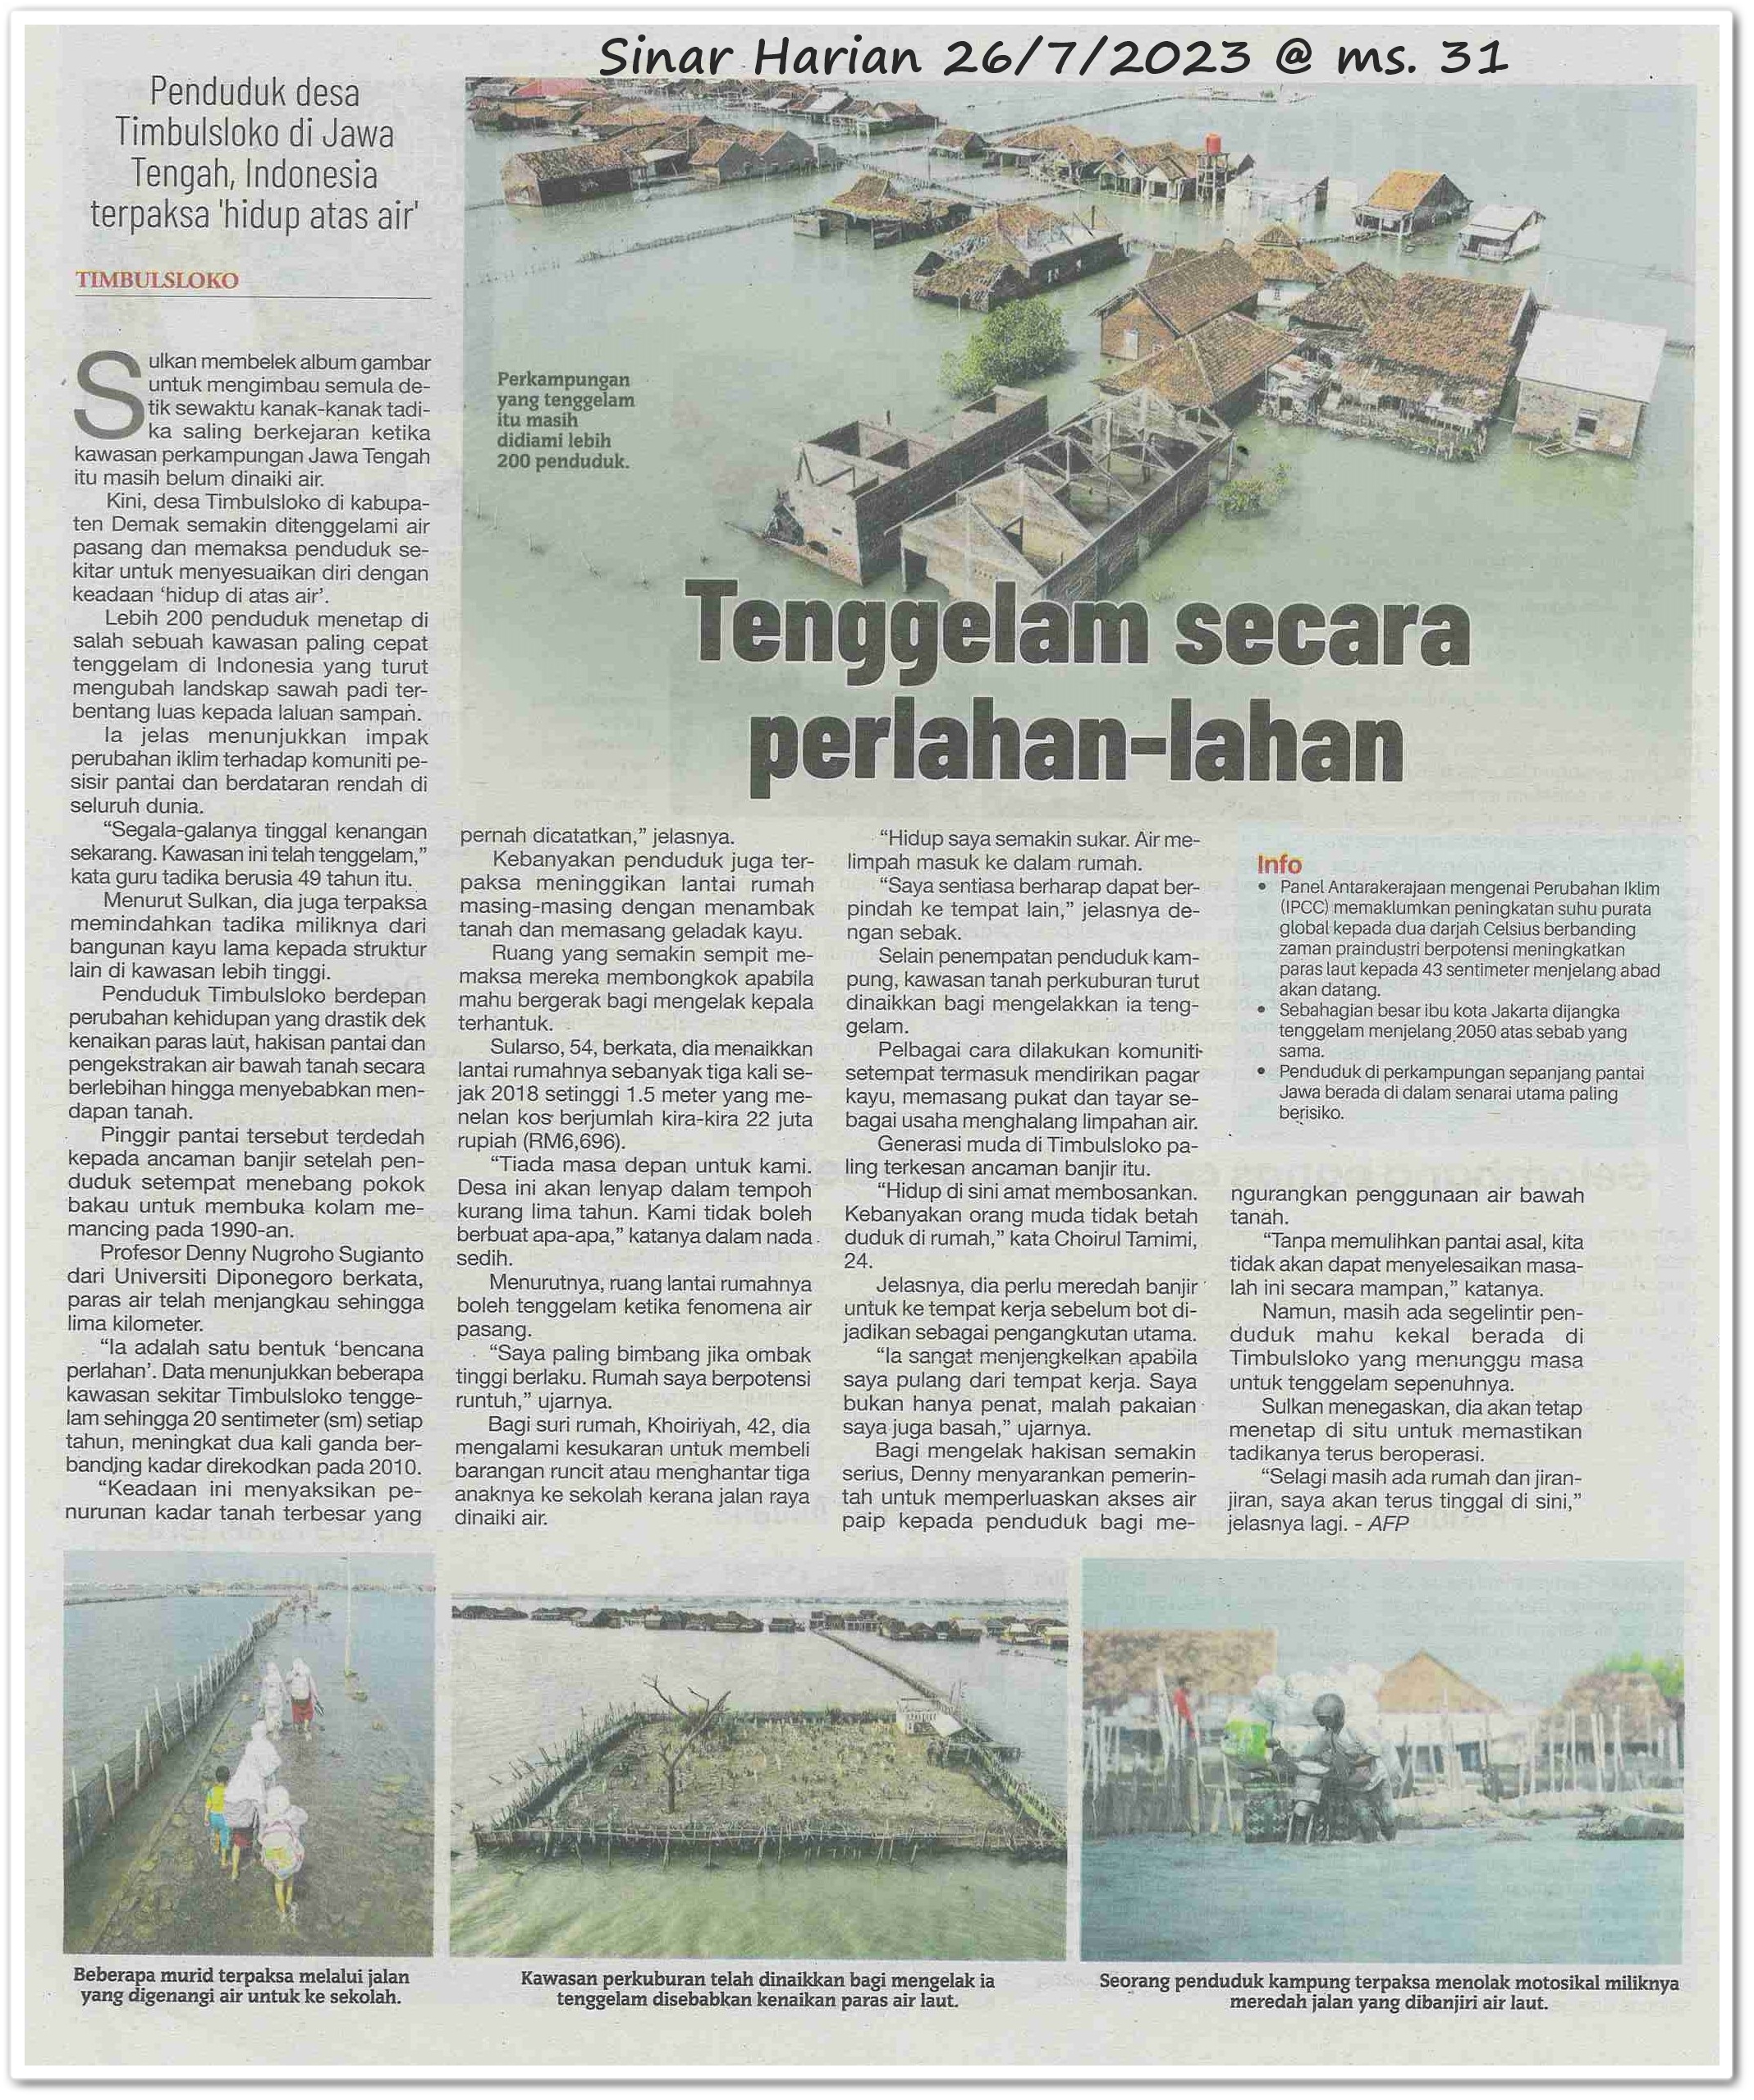 Tenggelam secara perlahan-lahan ; Penduduk desa Timbulsloko di Jawa Tengah, Indonesia terpaksa 'hidup atas air' - Keratan akhbar Sinar Harian 26 Julai 2023